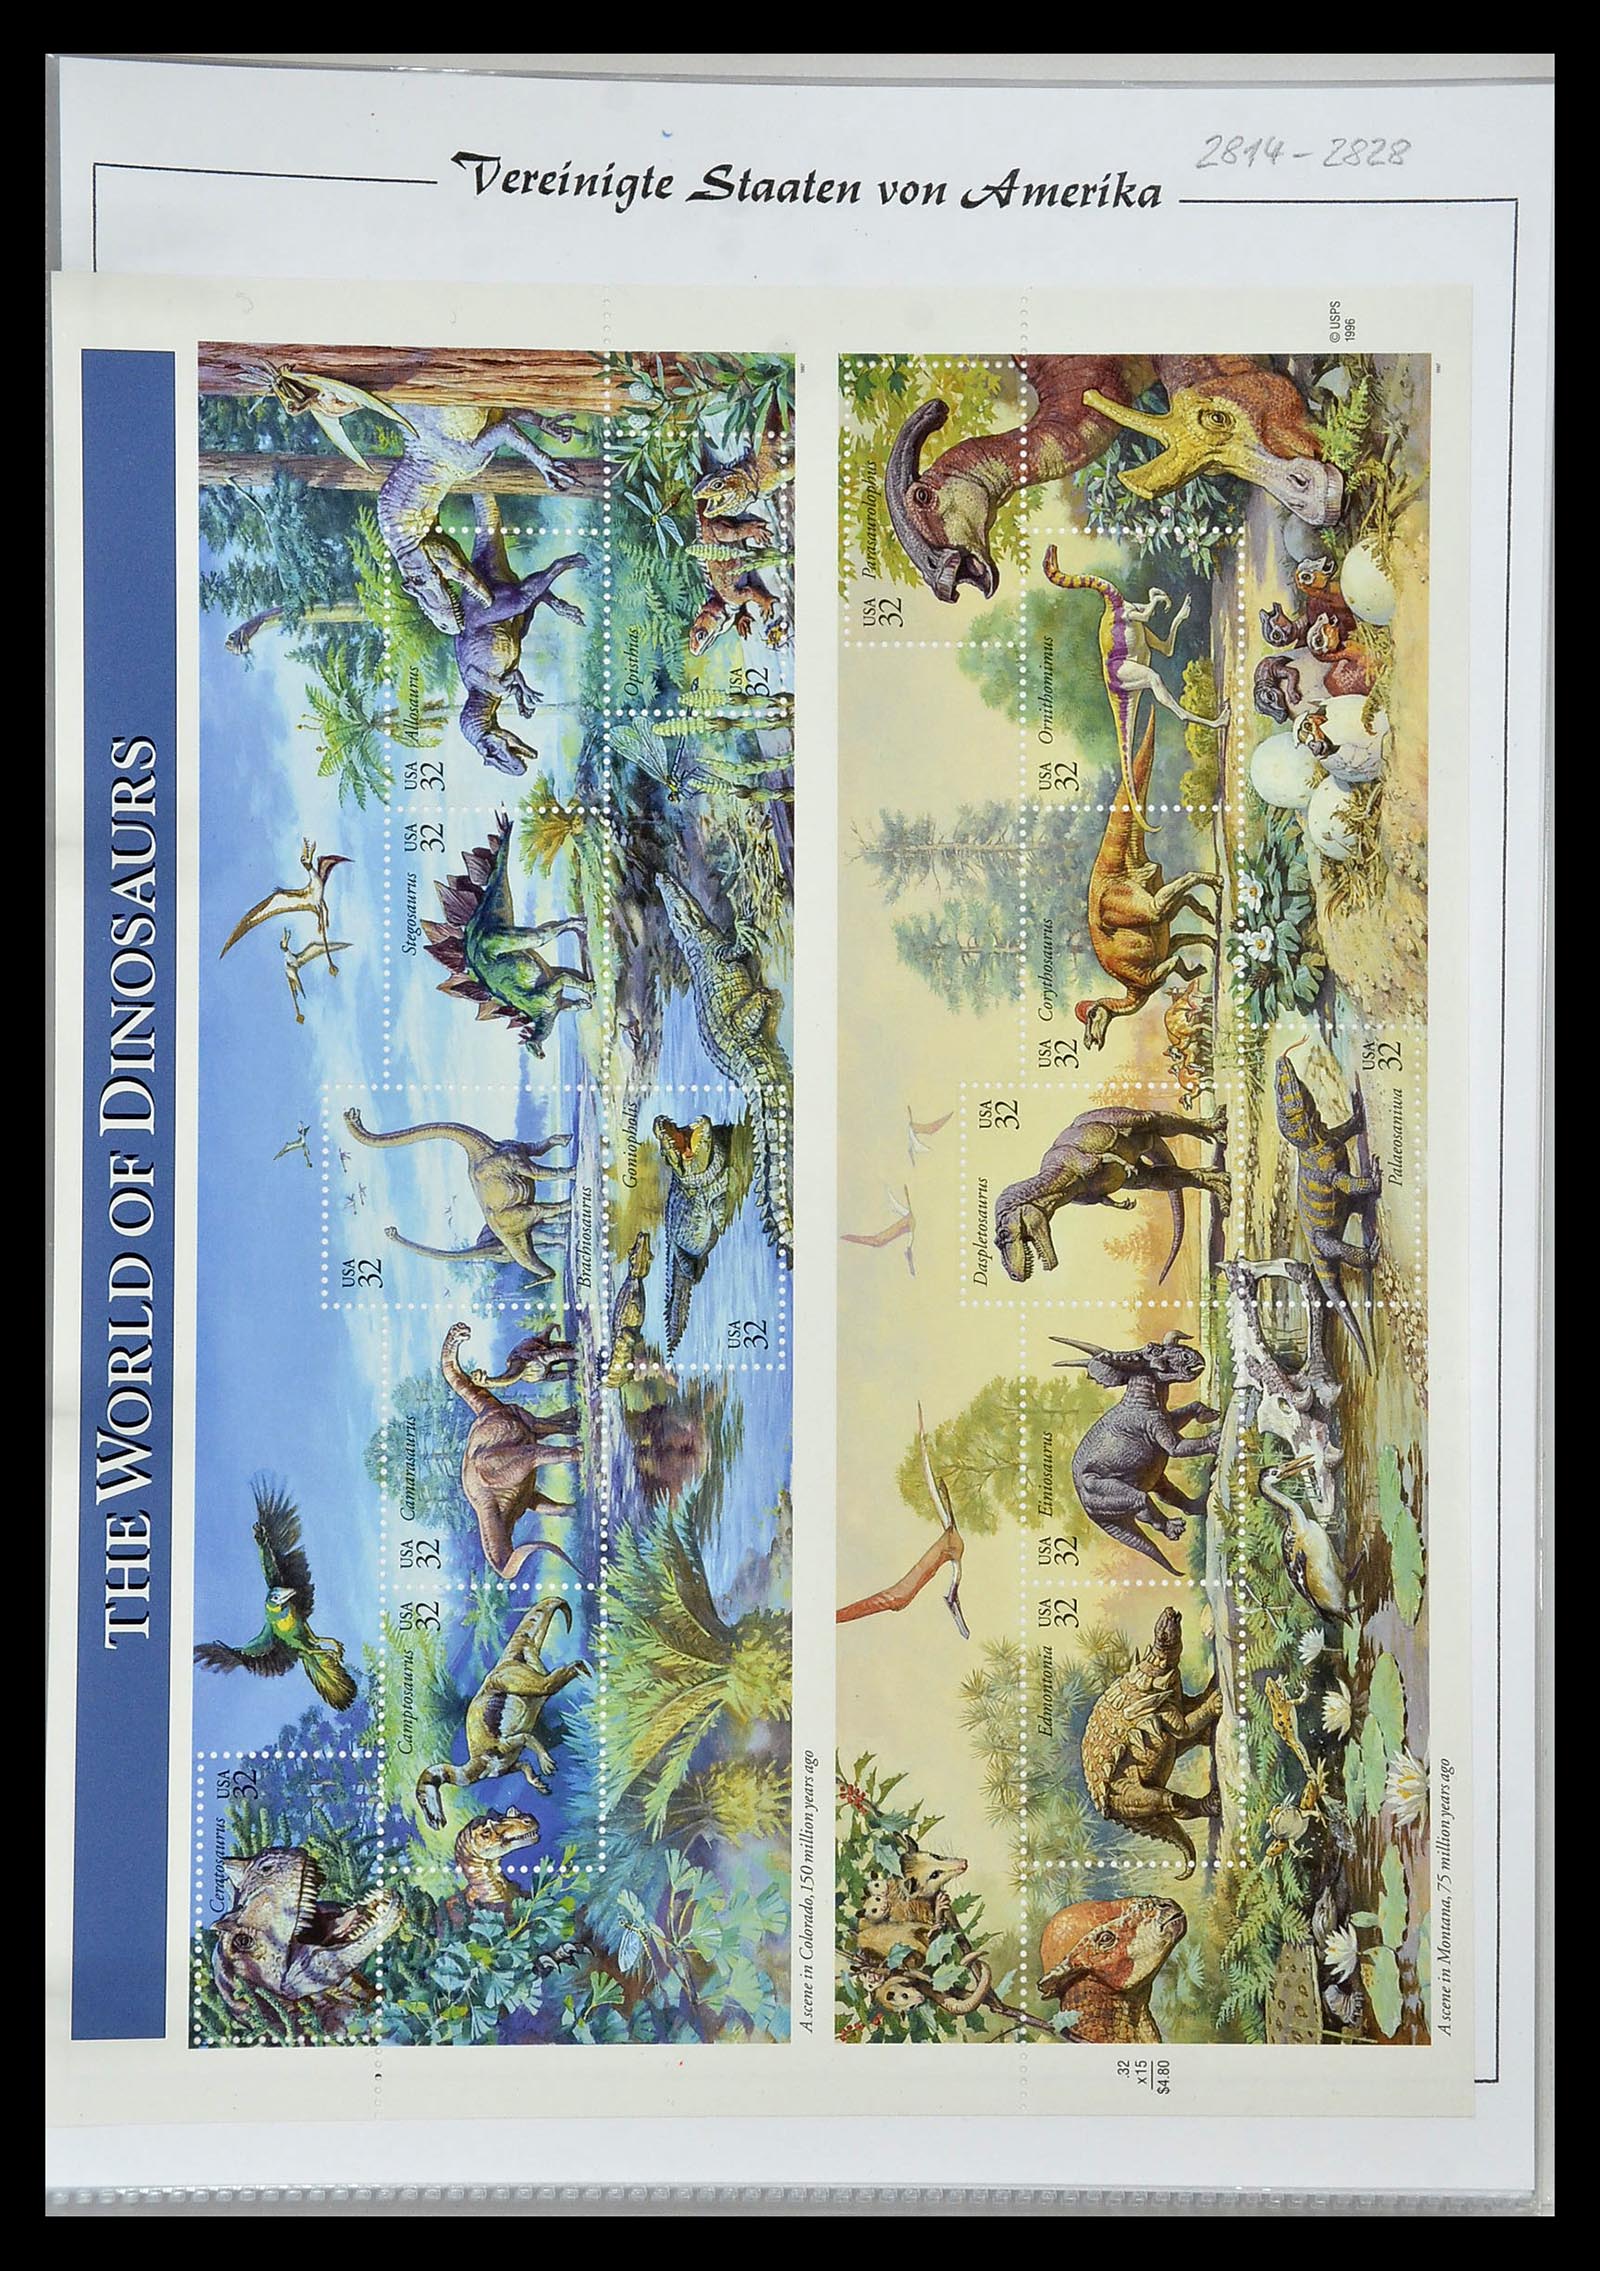 34834 076 - Stamp Collection 34834 USA sheetlets 1988-2005.